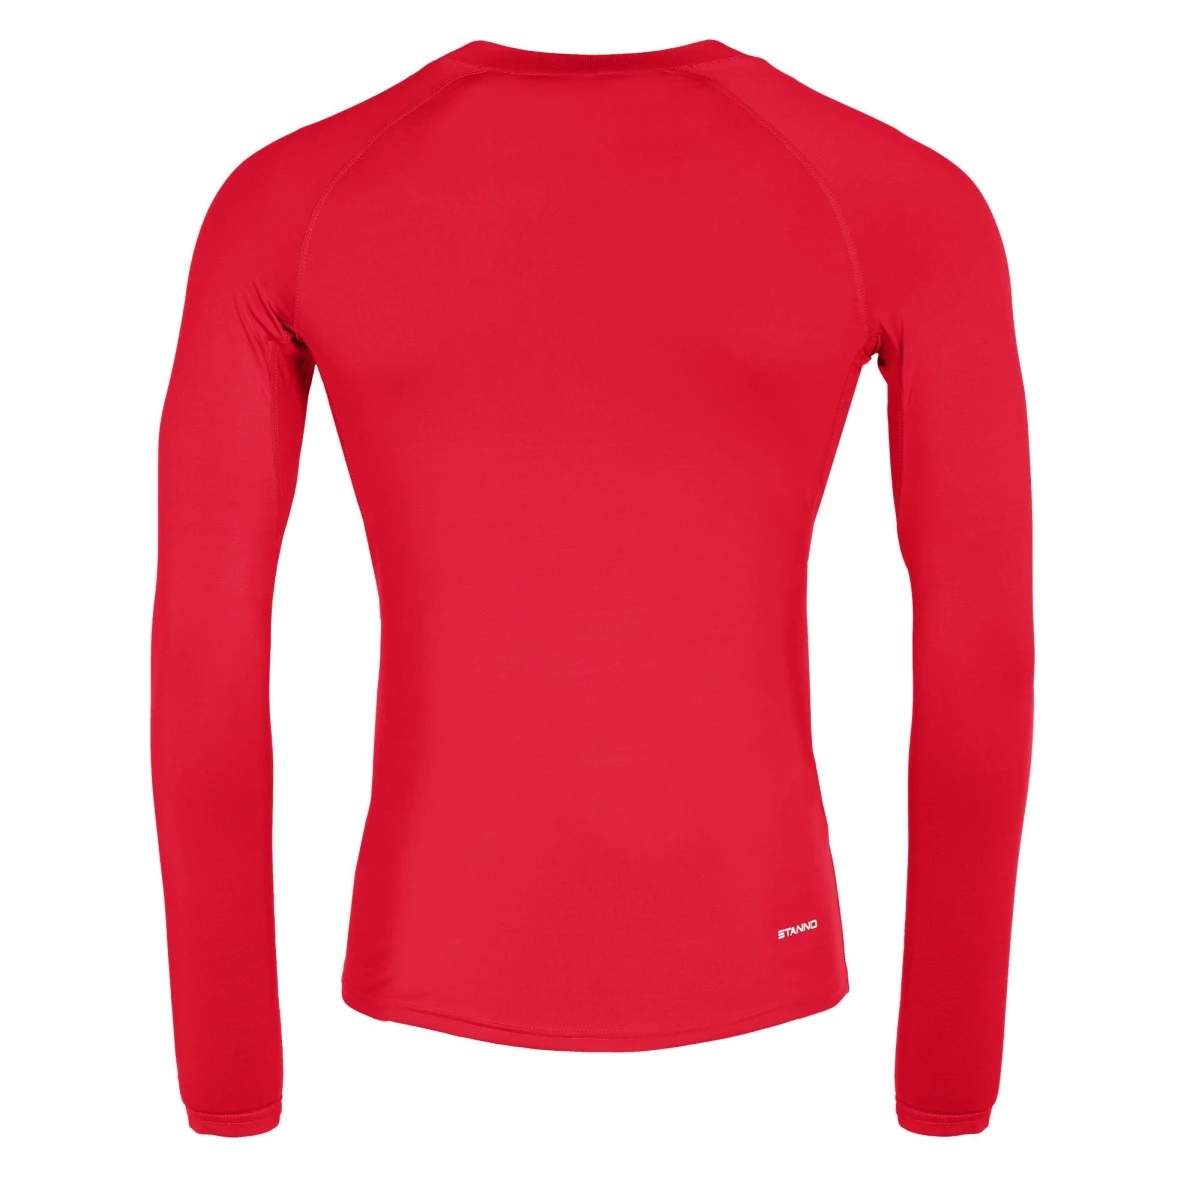 ondergoed Fabriek onbetaald Stanno Thermoshirt LM - Lange Mouwen - Shirts - Trainingskleding - Voetbal  - Intersport van den Broek / Biggelaar